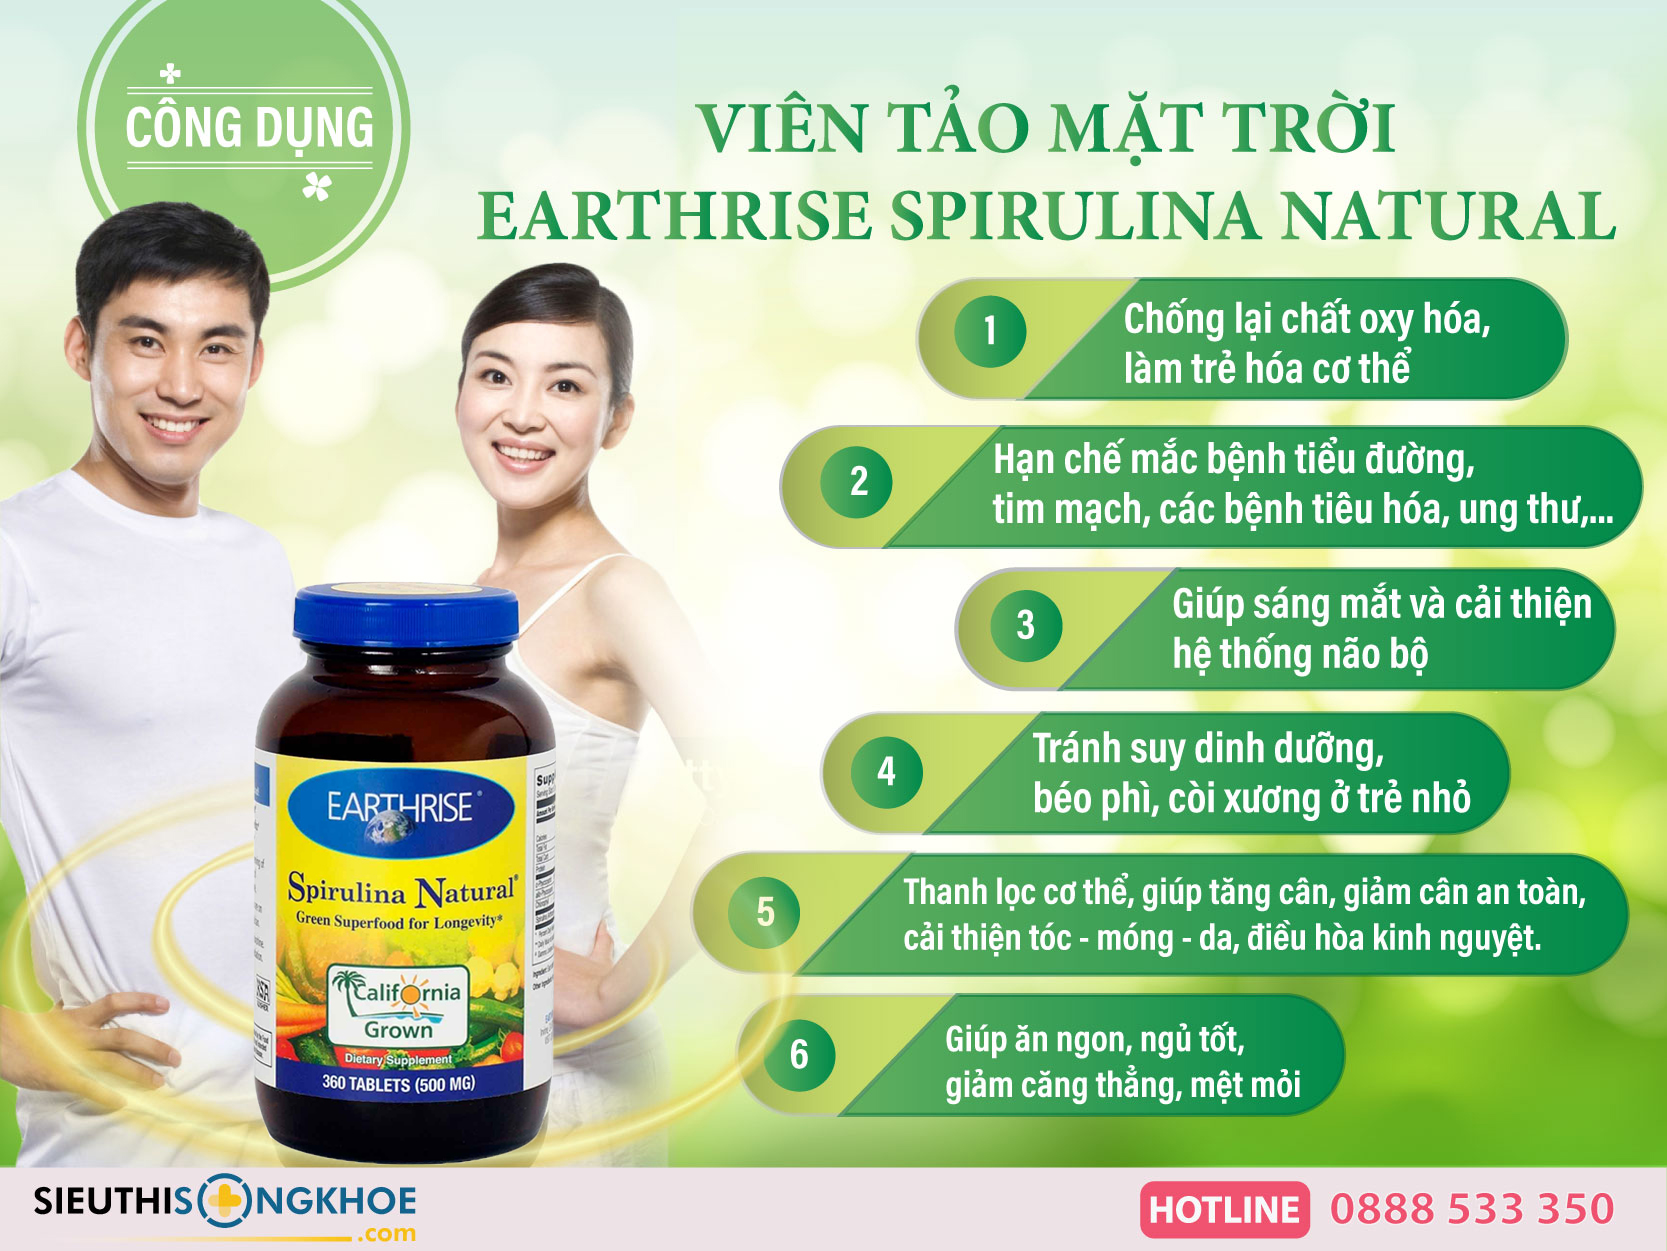 cong-dung-vien-tao-mat-troi-earthrise-spirulina-natural-03